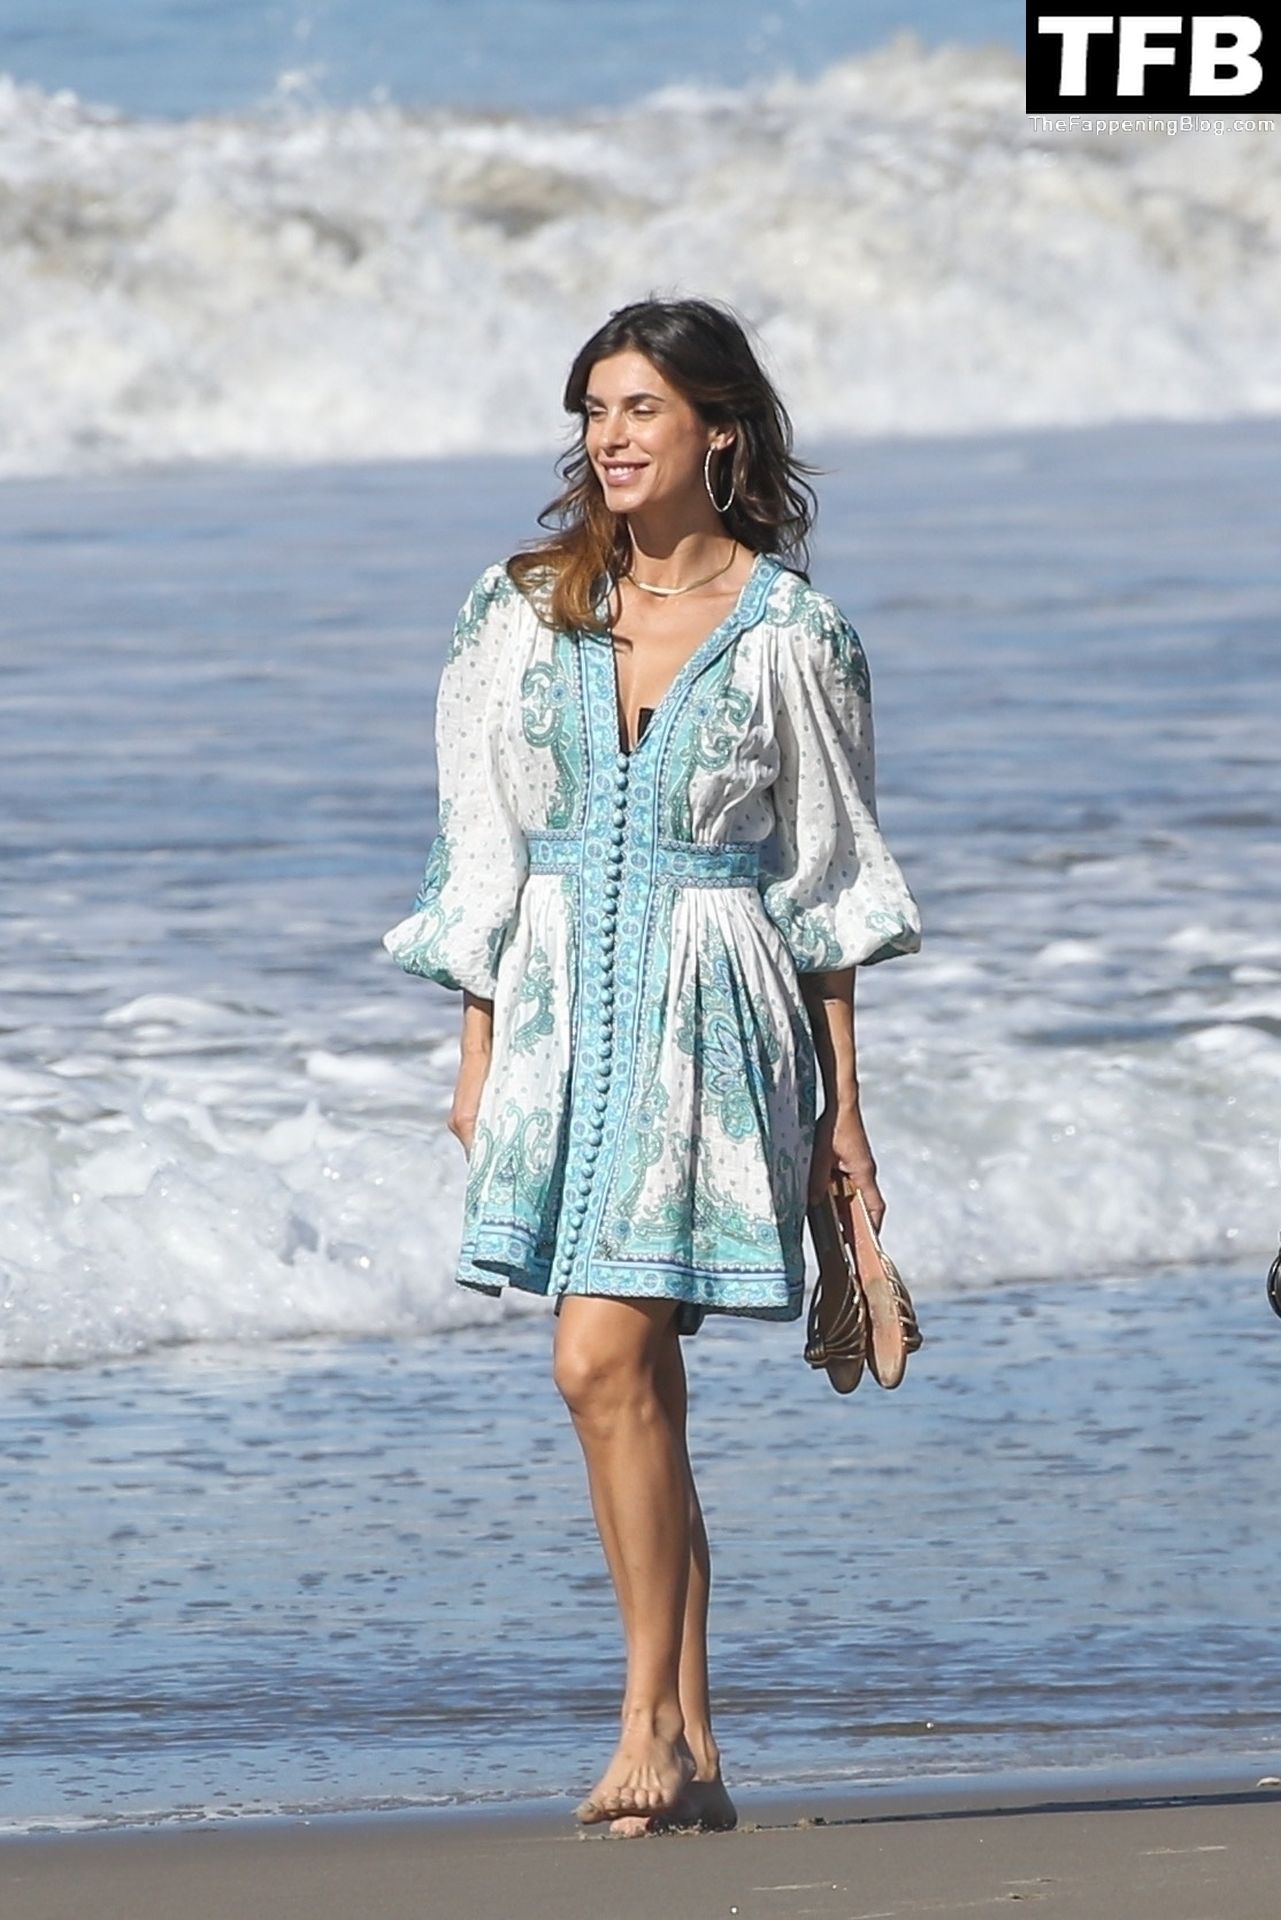 Elisabetta Canalis Sexy on Beach Dress 1